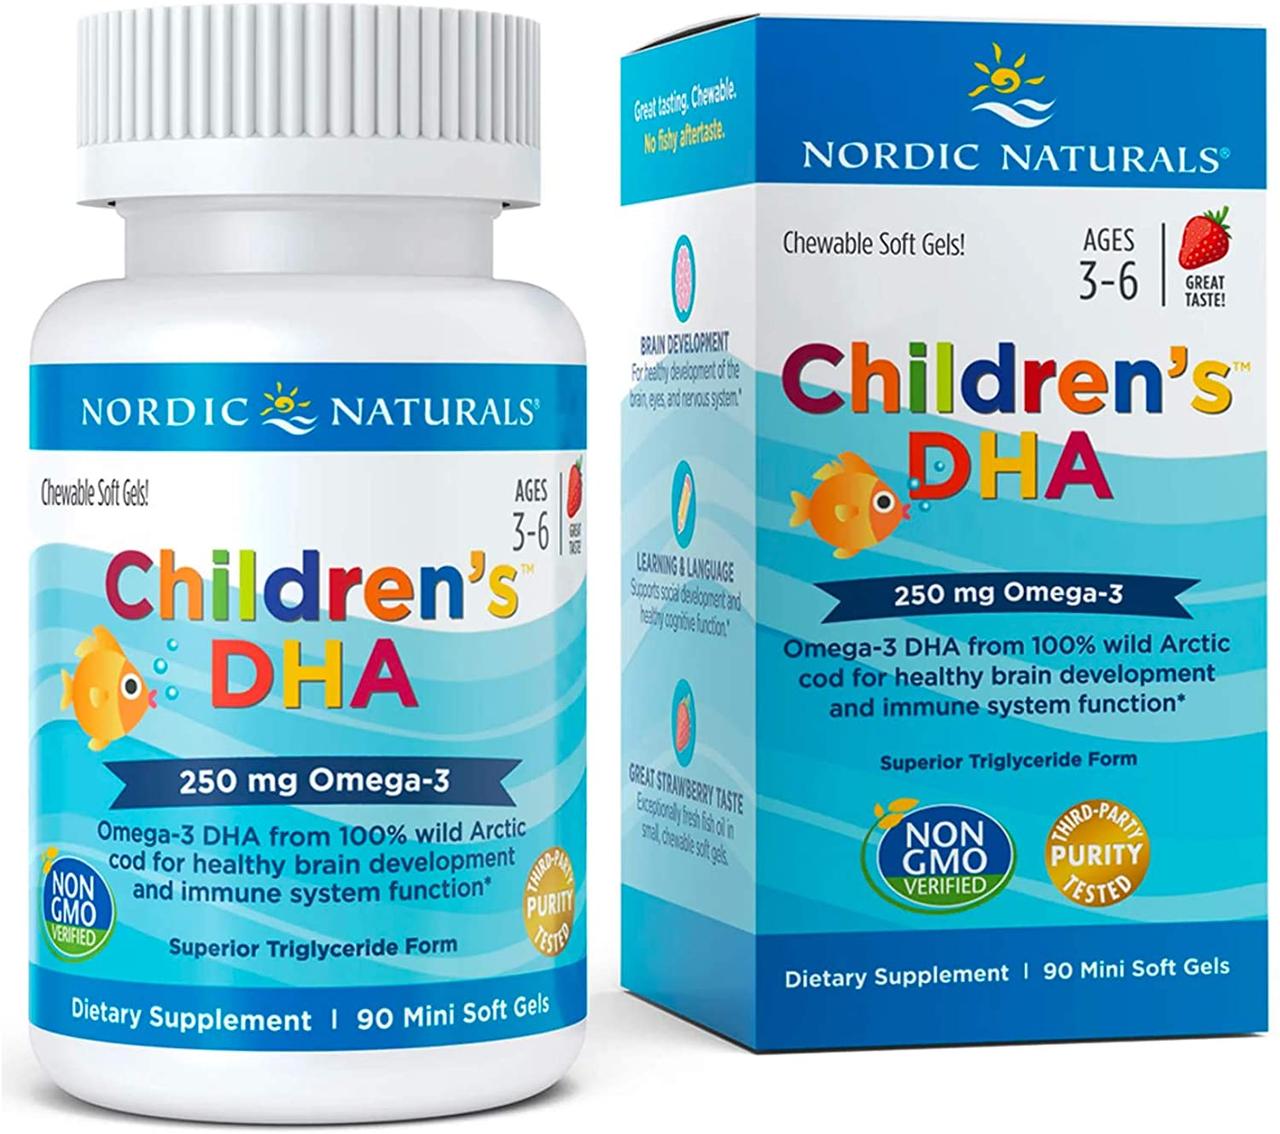 Nordic Naturals Children's DHA жувальні кульки 250 мг Omega-3 на порцію, дітям 3-6 років, полуниця, 90 шт